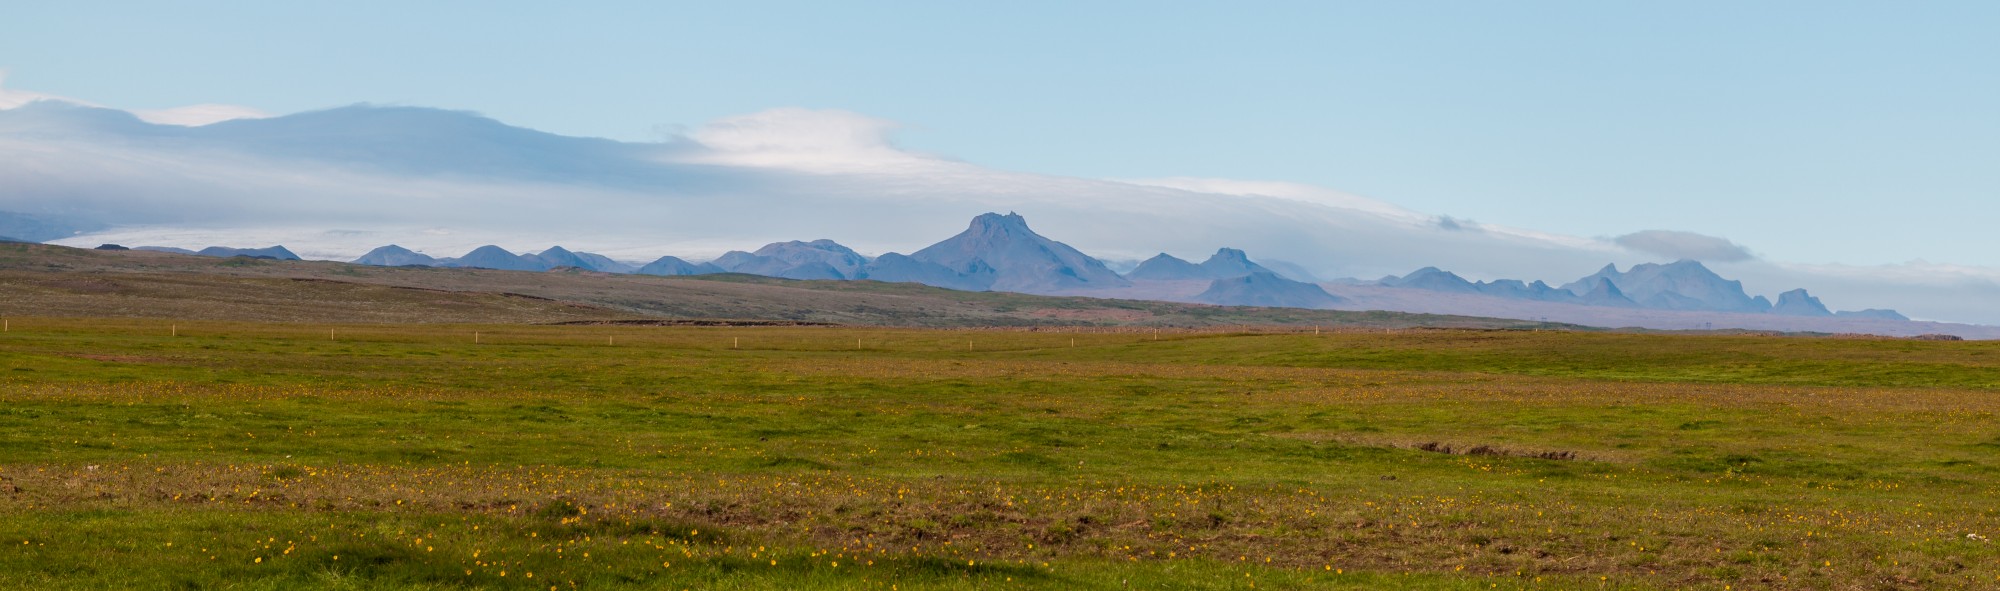 Tindfjallajökull, Suðurland, Islandia, 2014-08-16, DD 130